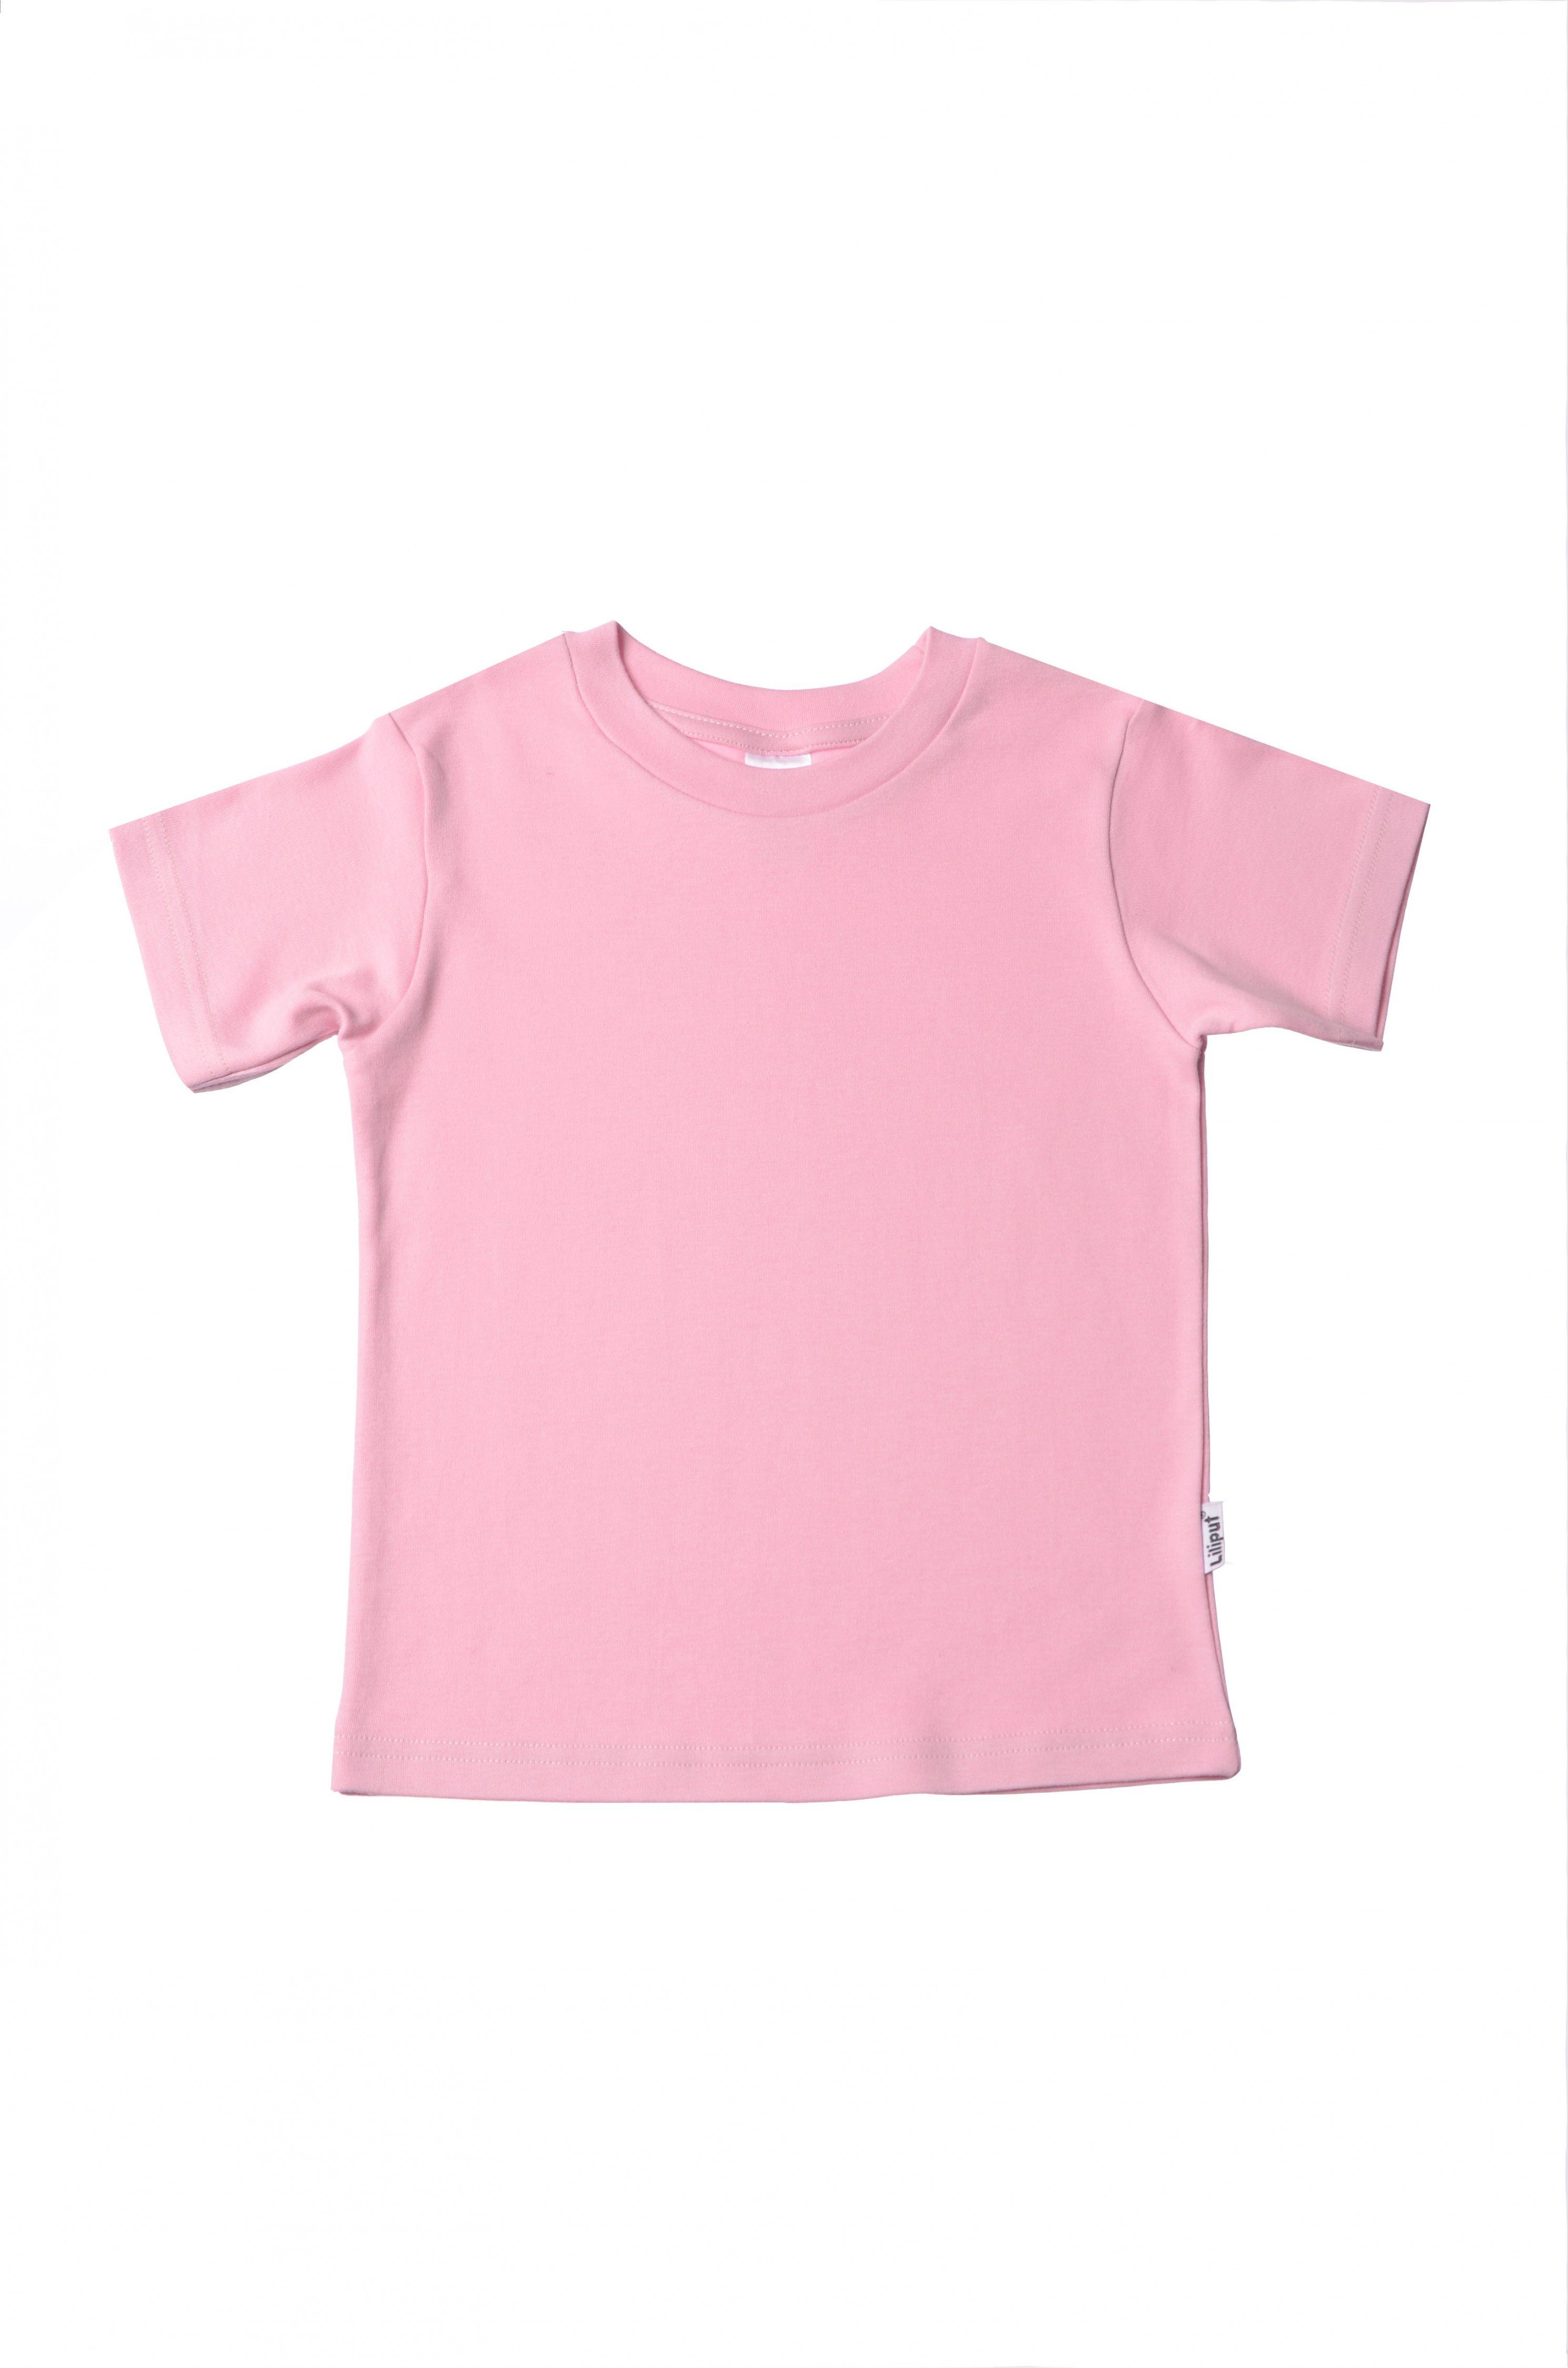 T-Shirt Design Liliput in rosa niedlichem